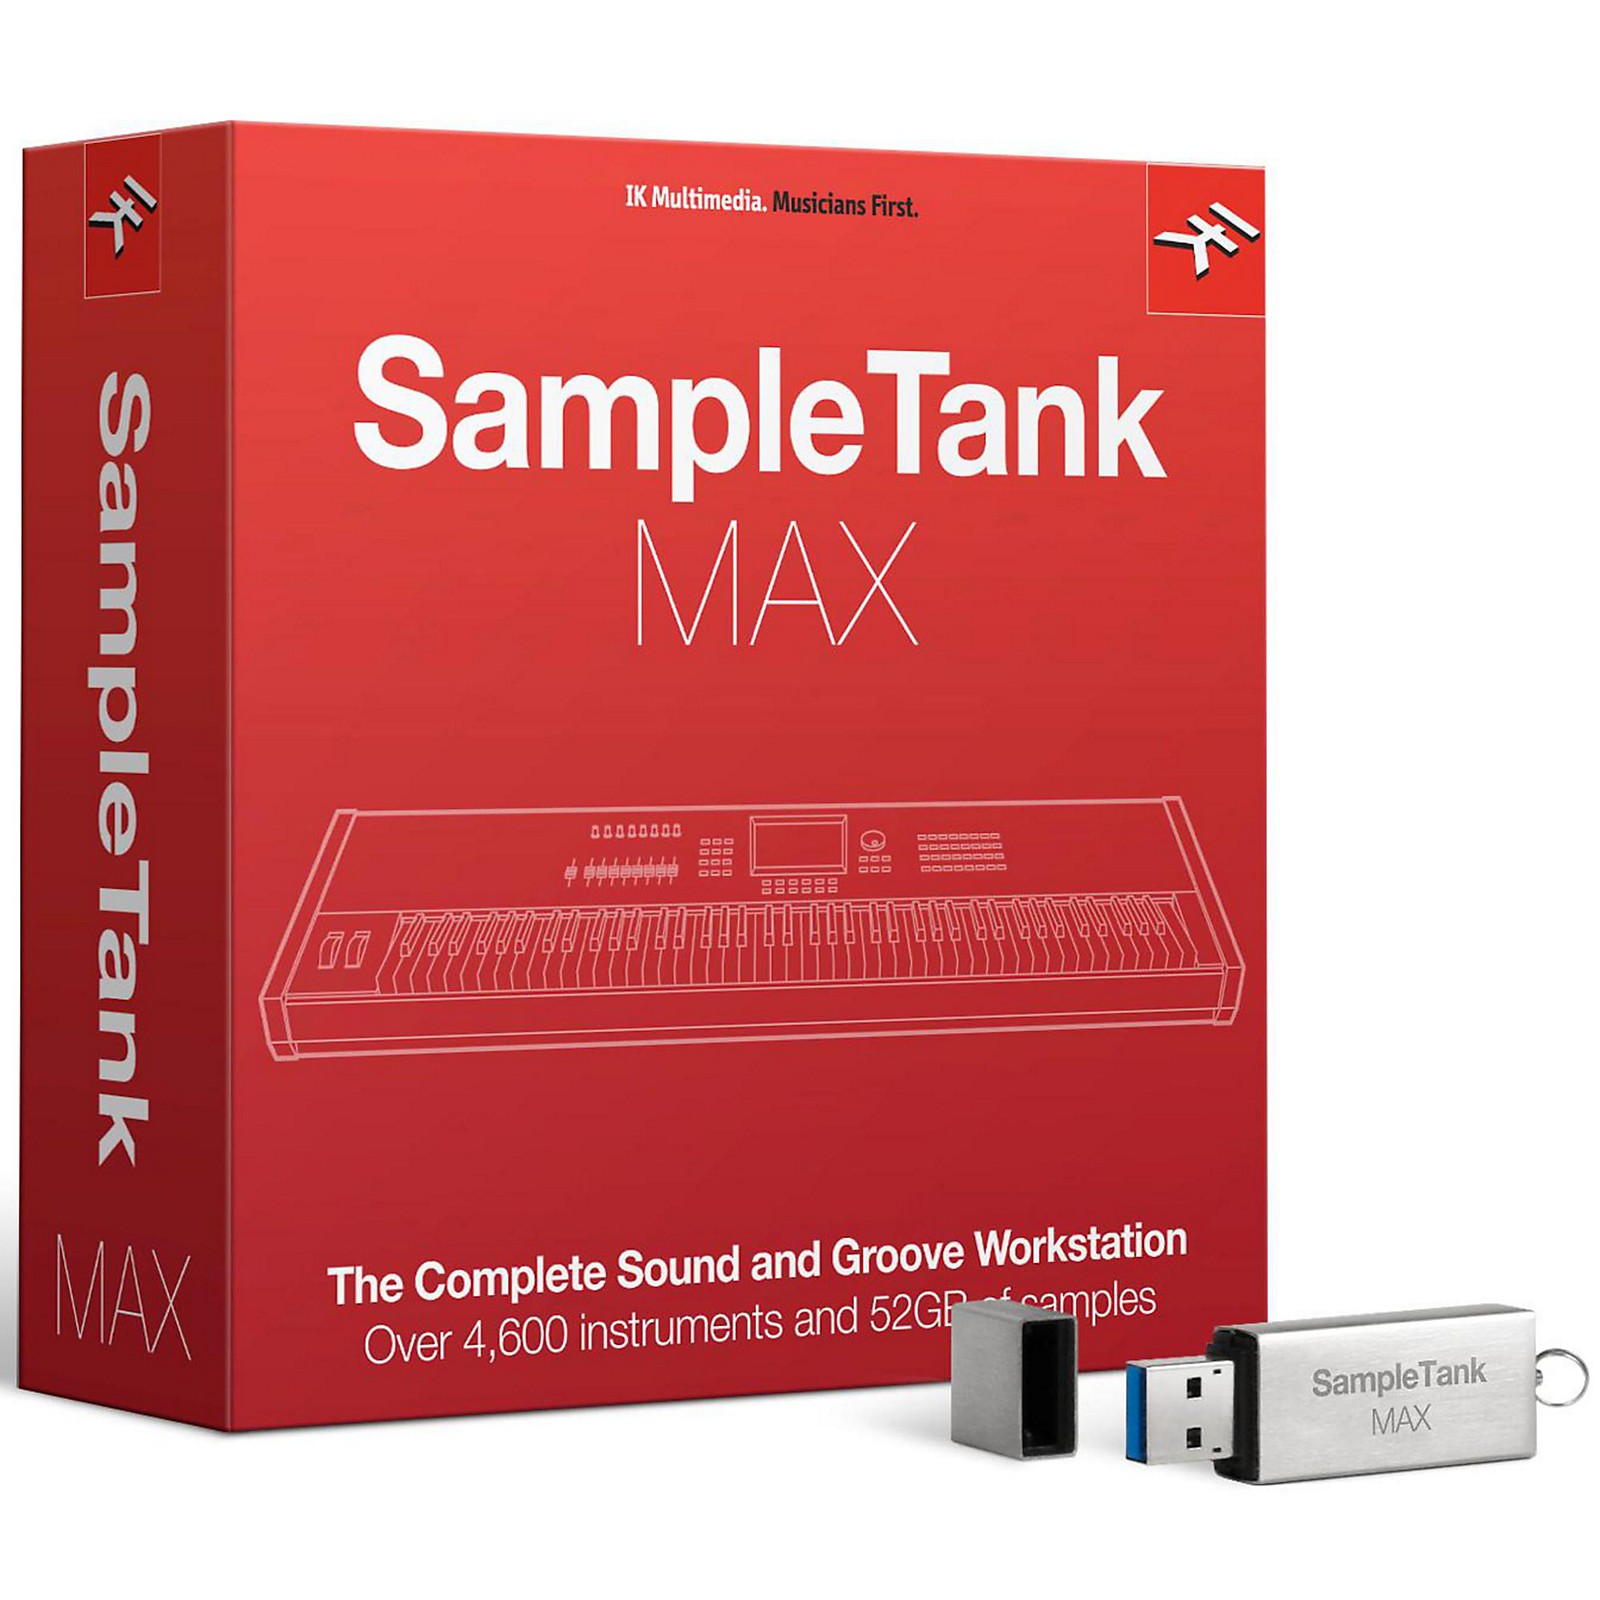 ik multimedia sample tank